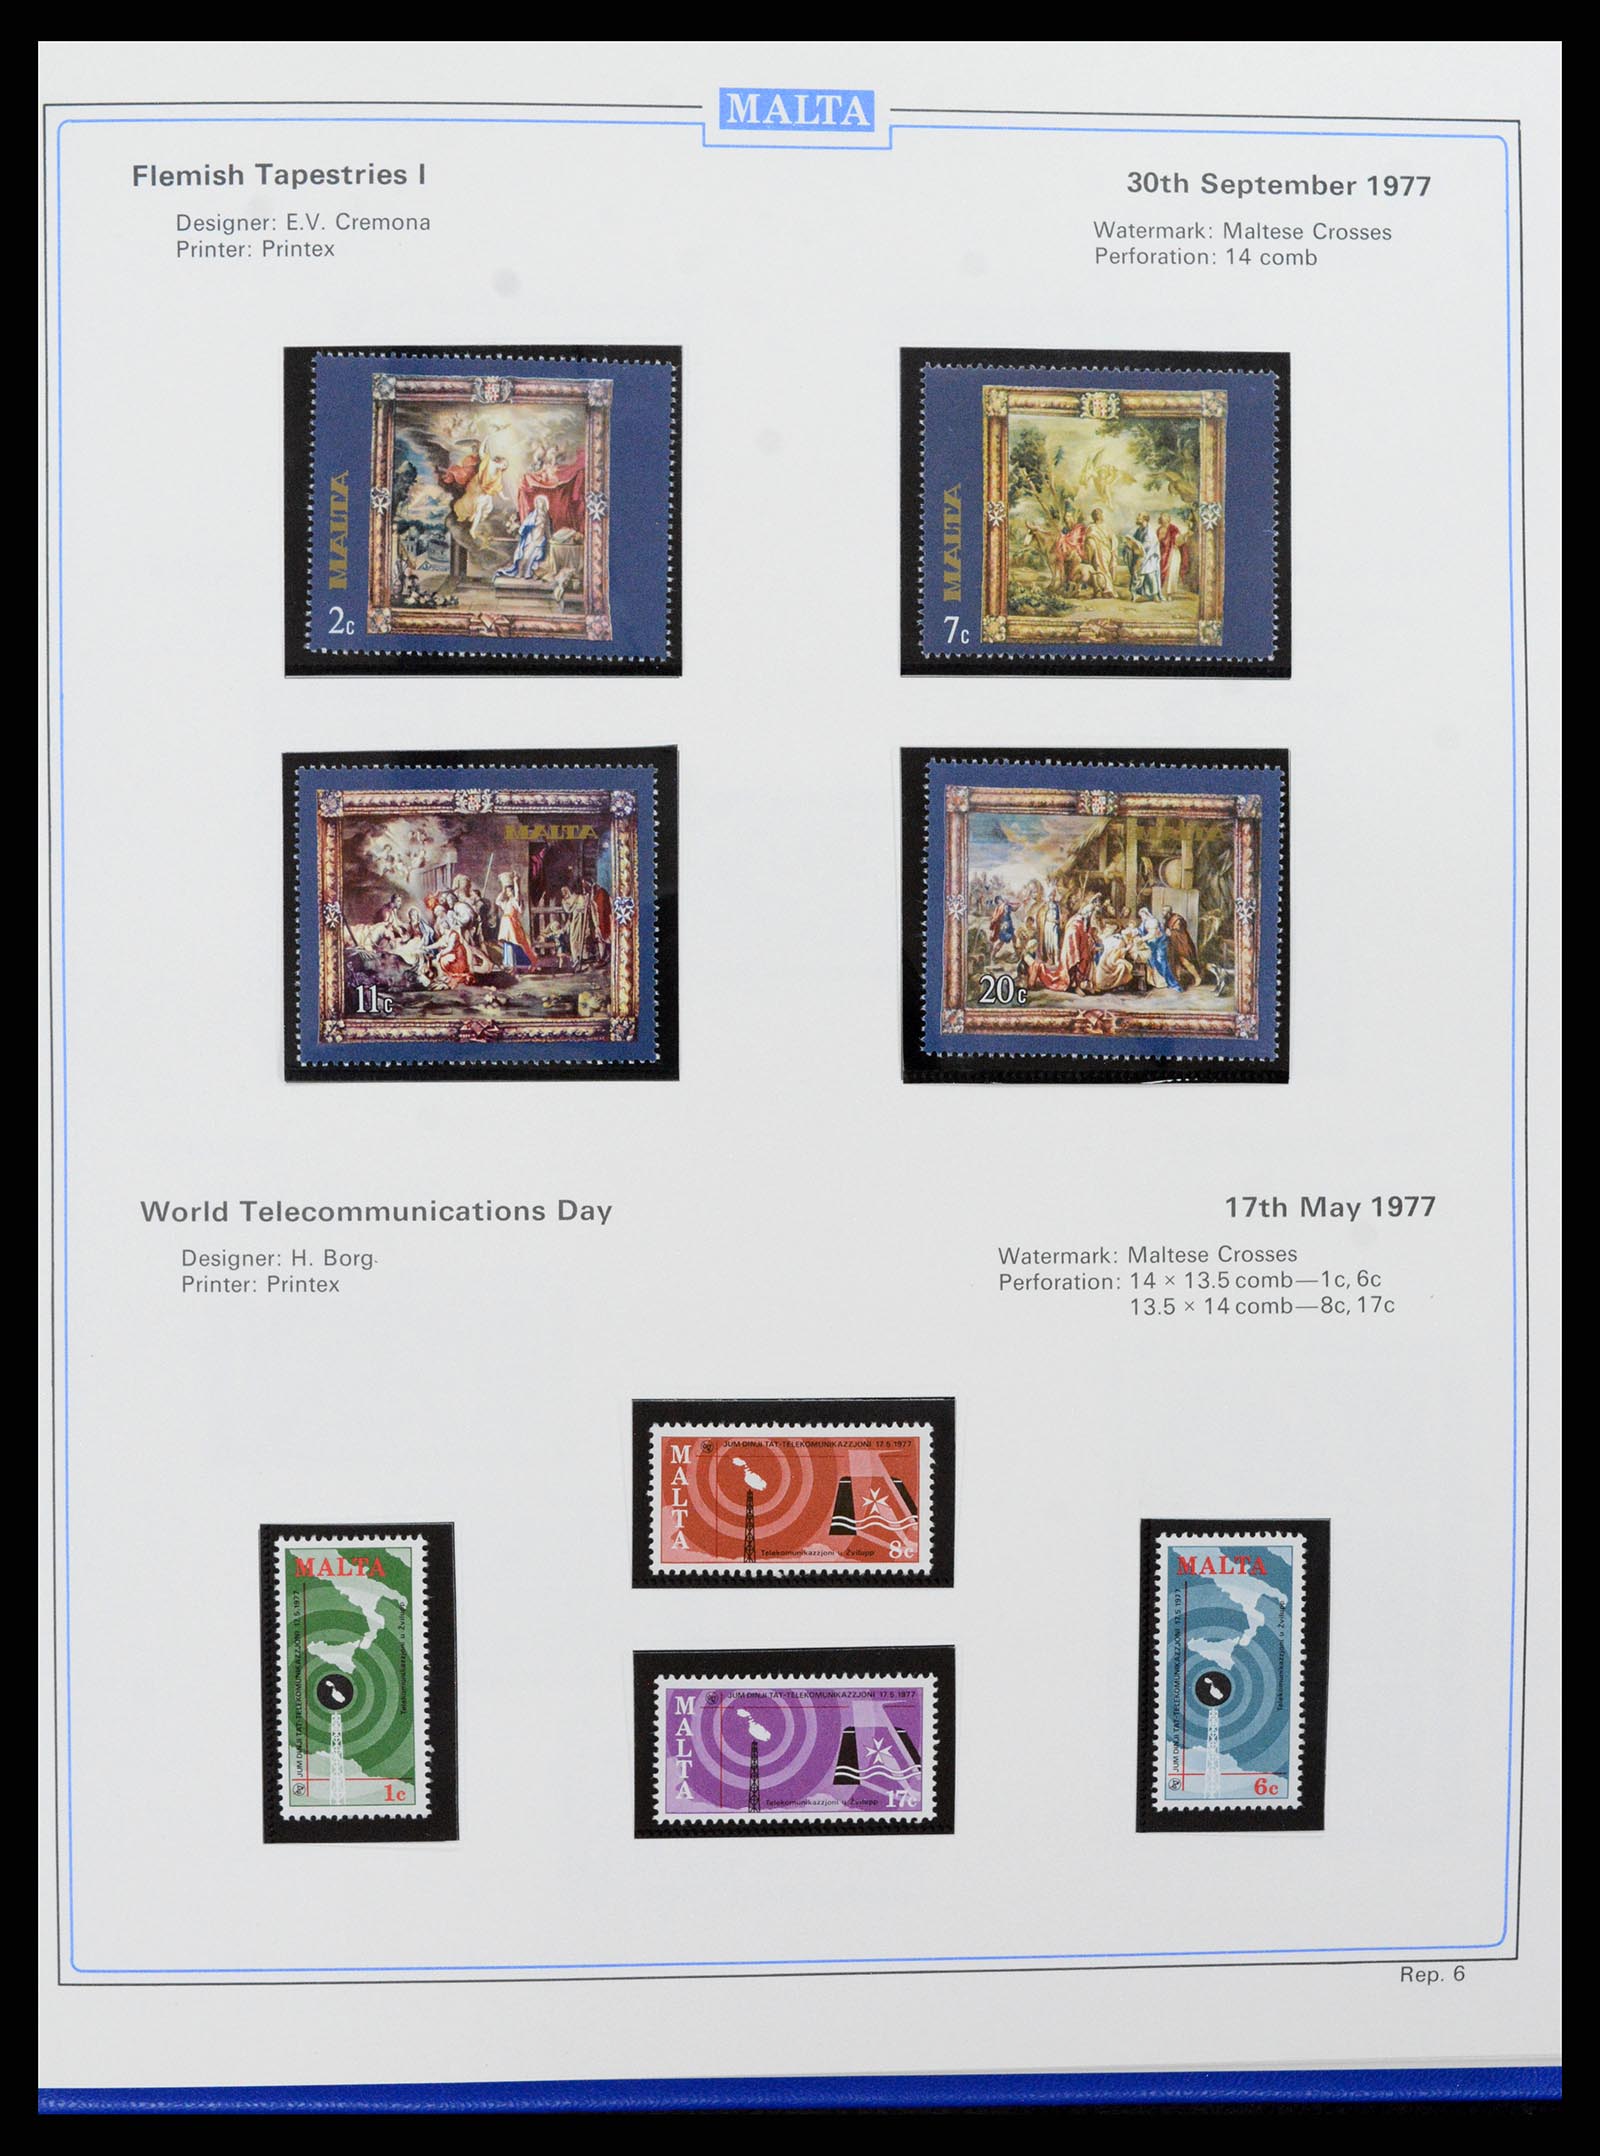 37374 054 - Stamp collection 37374 Malta 1885-2012.